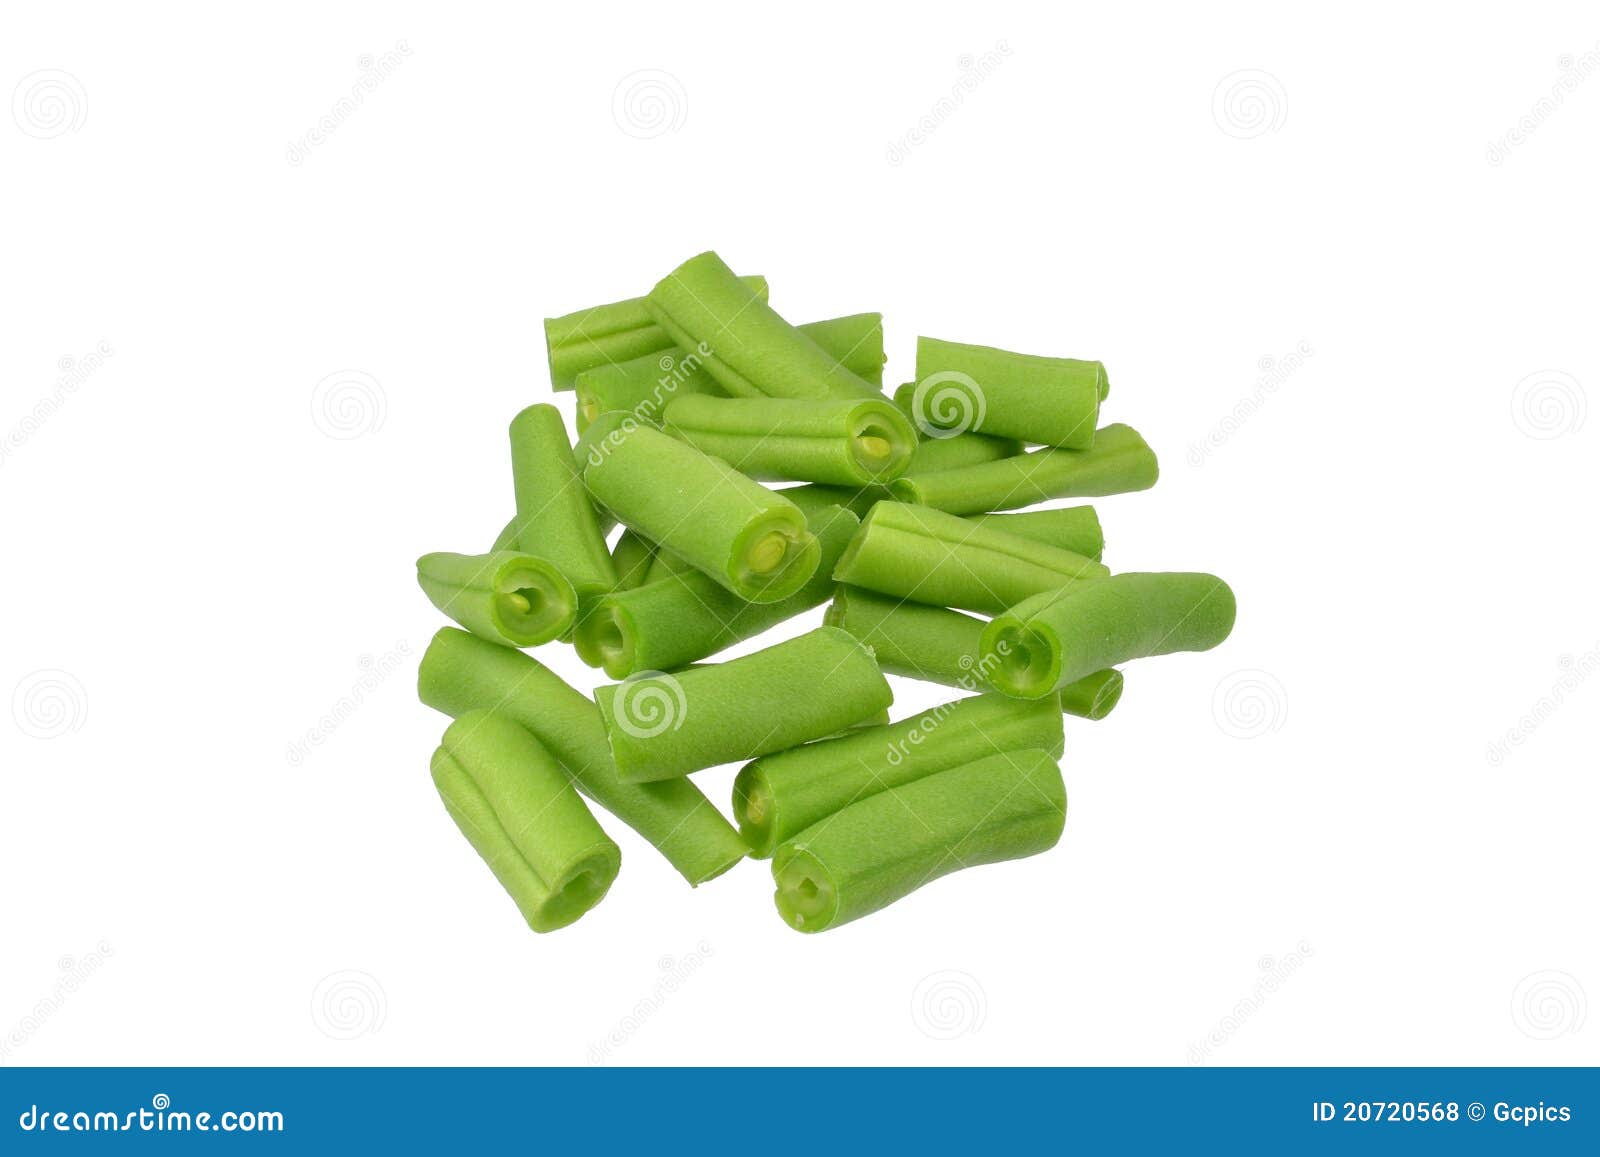 clipart green beans - photo #28